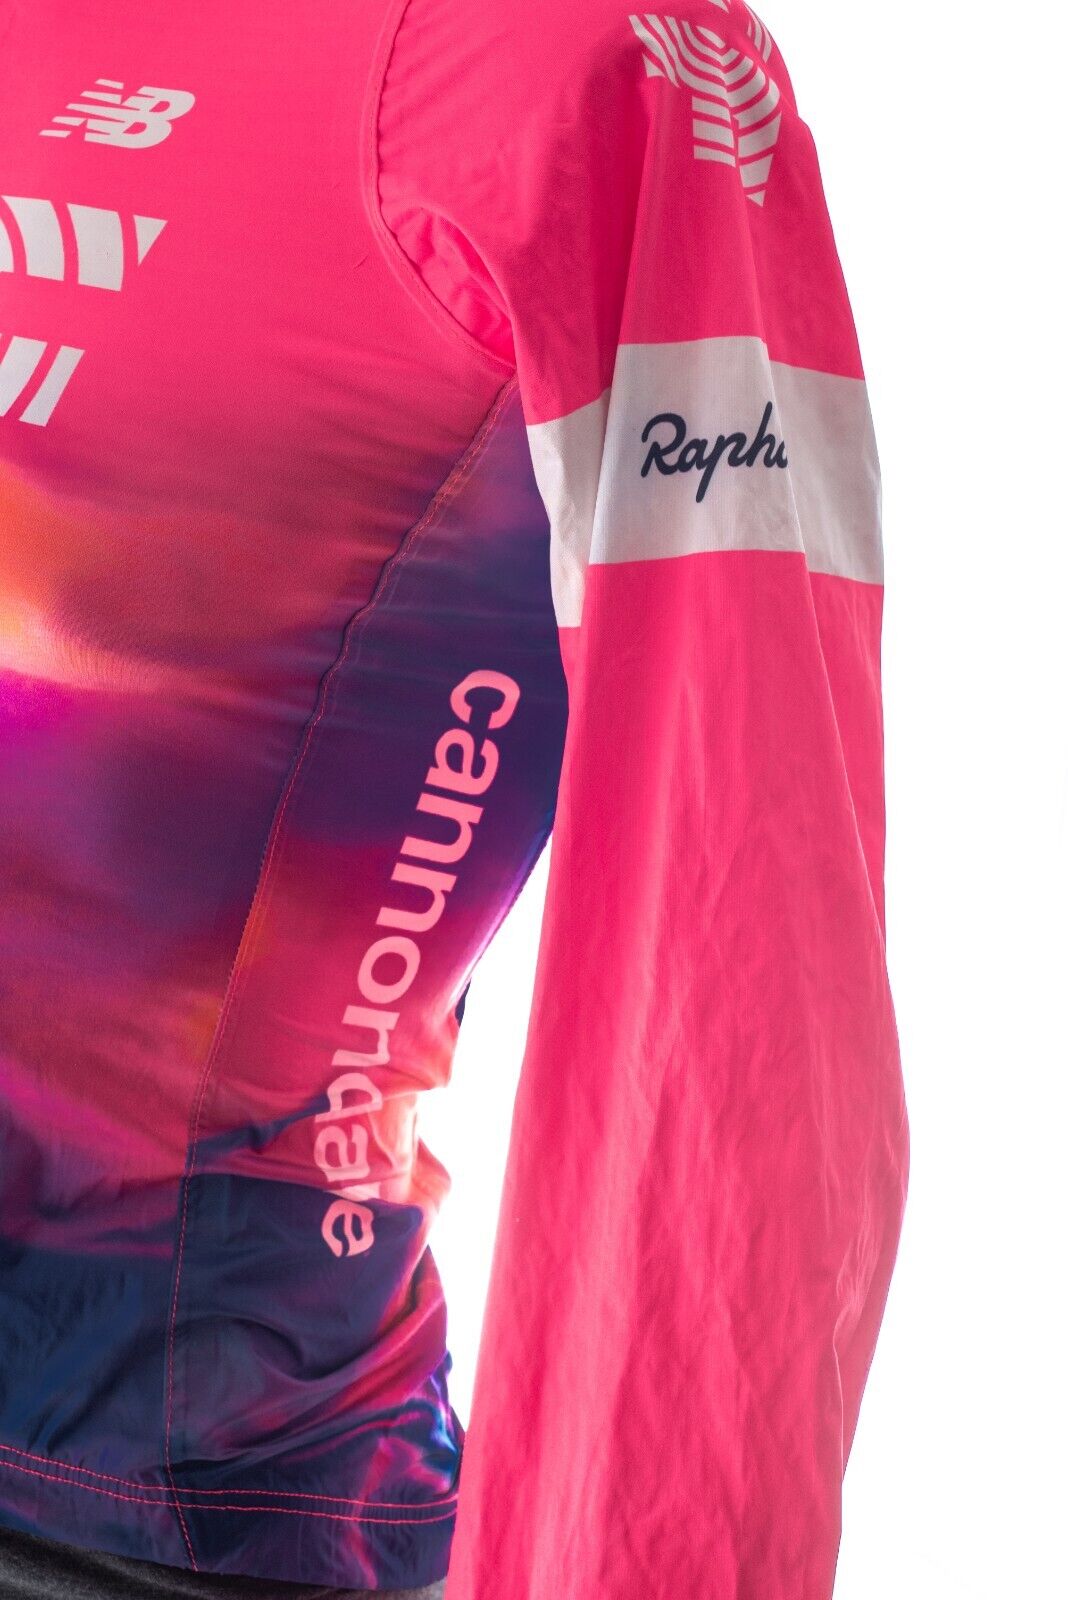 Rapha EF Education First Pro Team Rain Jacket Men SIZE 1 Road Bike Race POC 2019